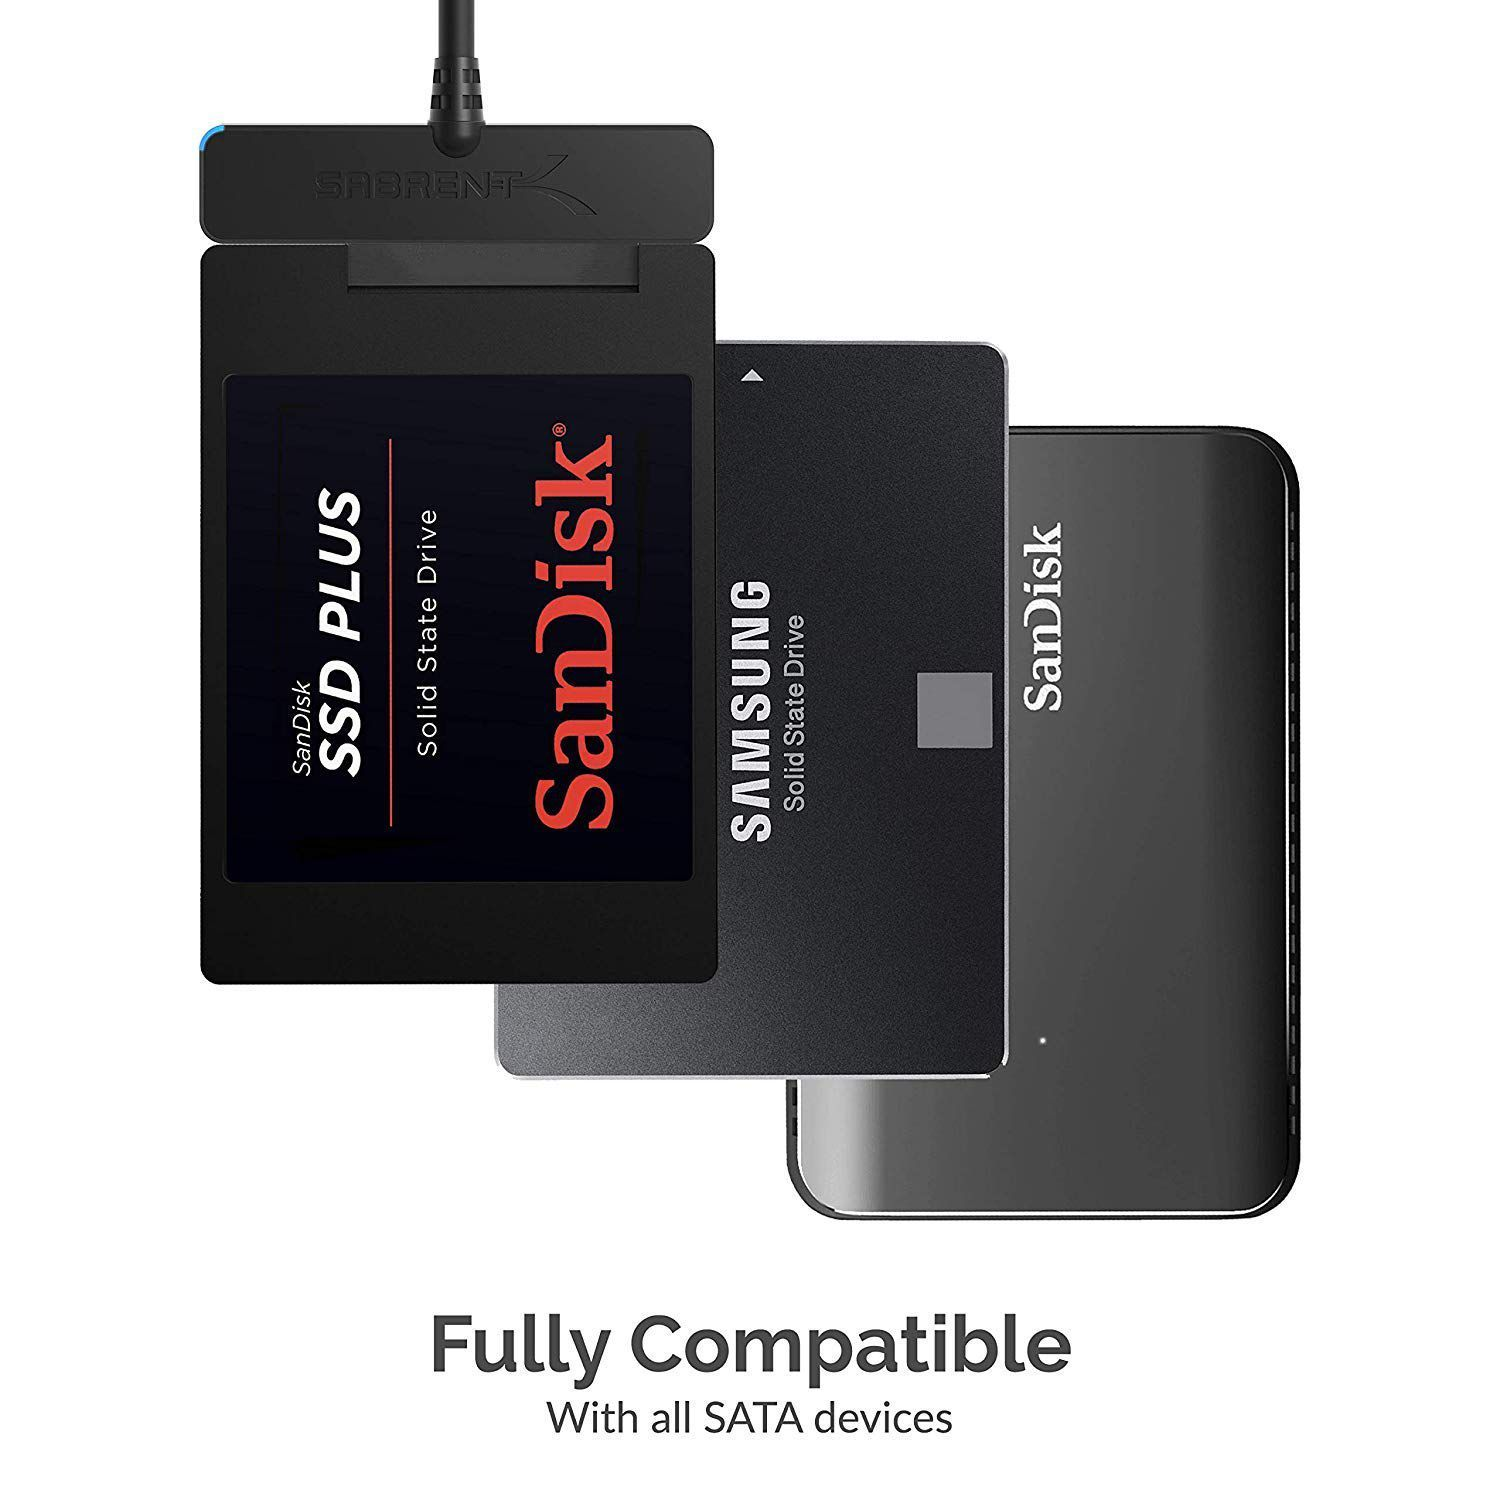 SABRENT USB 3.0 to SSD / 2.5 Inch SATA I/II/III Hard Drive Adapter (EC-SSHD)